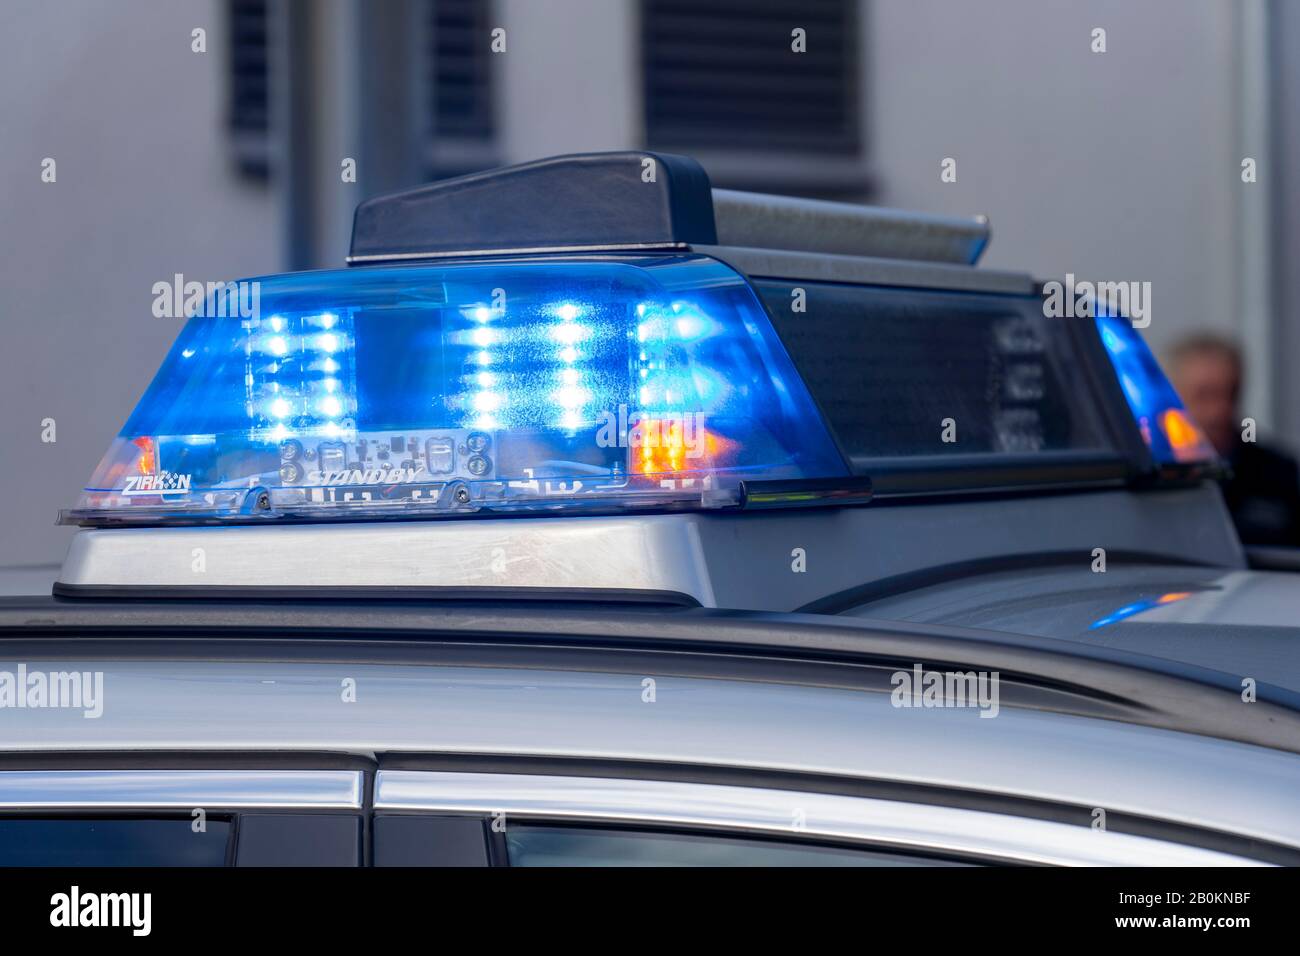 https://c8.alamy.com/compde/2b0knbf/polizei-blaulicht-led-leuchten-eines-polizeiautos-2b0knbf.jpg